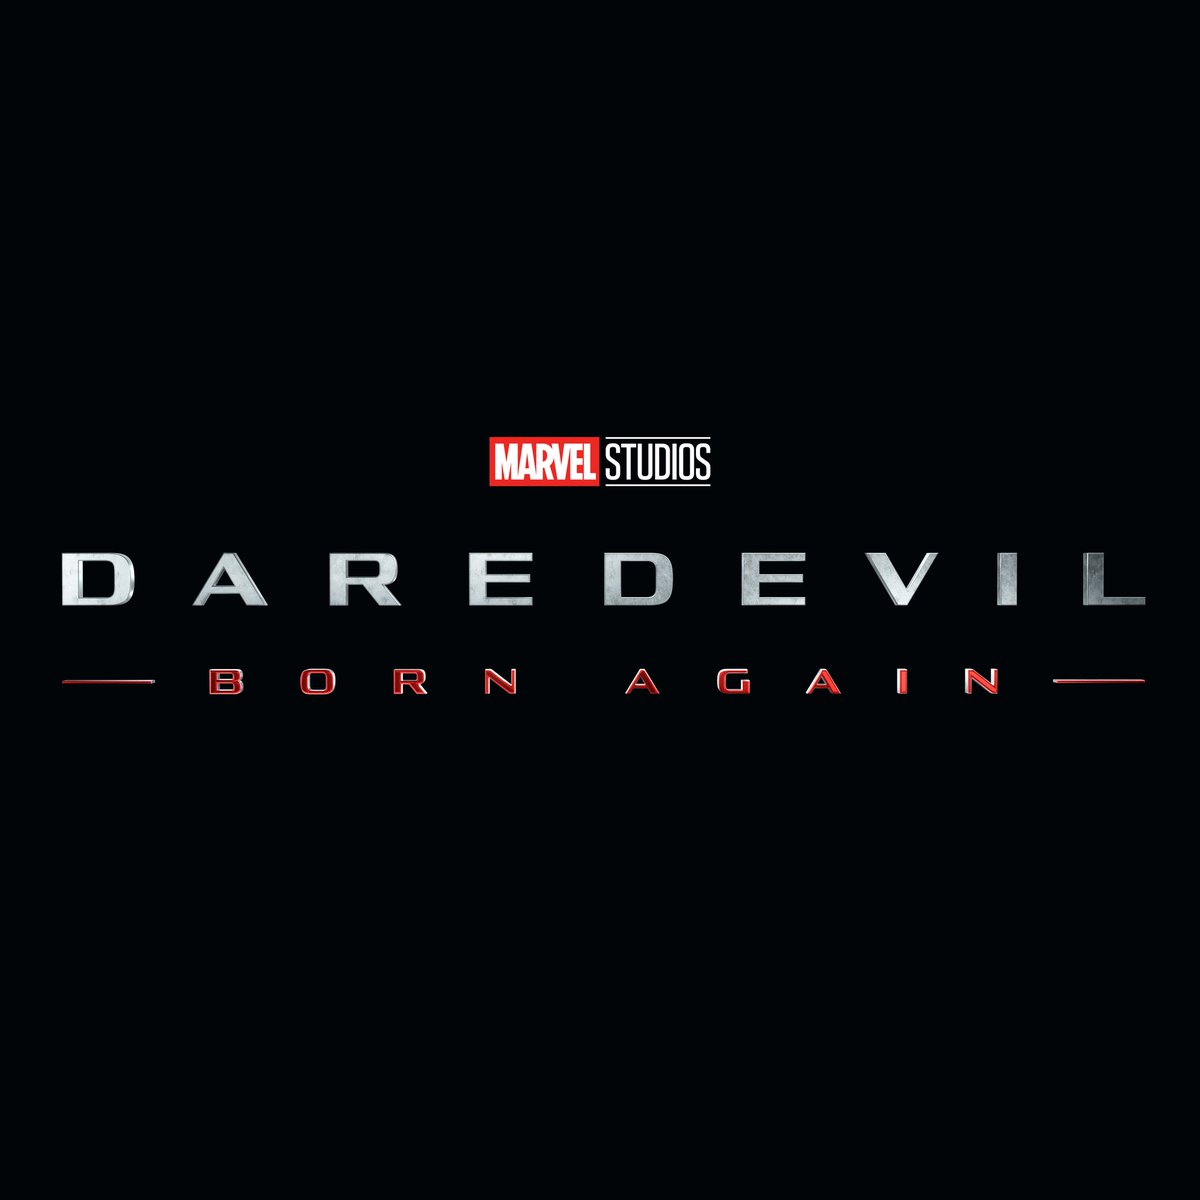 ‘DAREDEVIL: BORN AGAIN’ has wrapped filming.